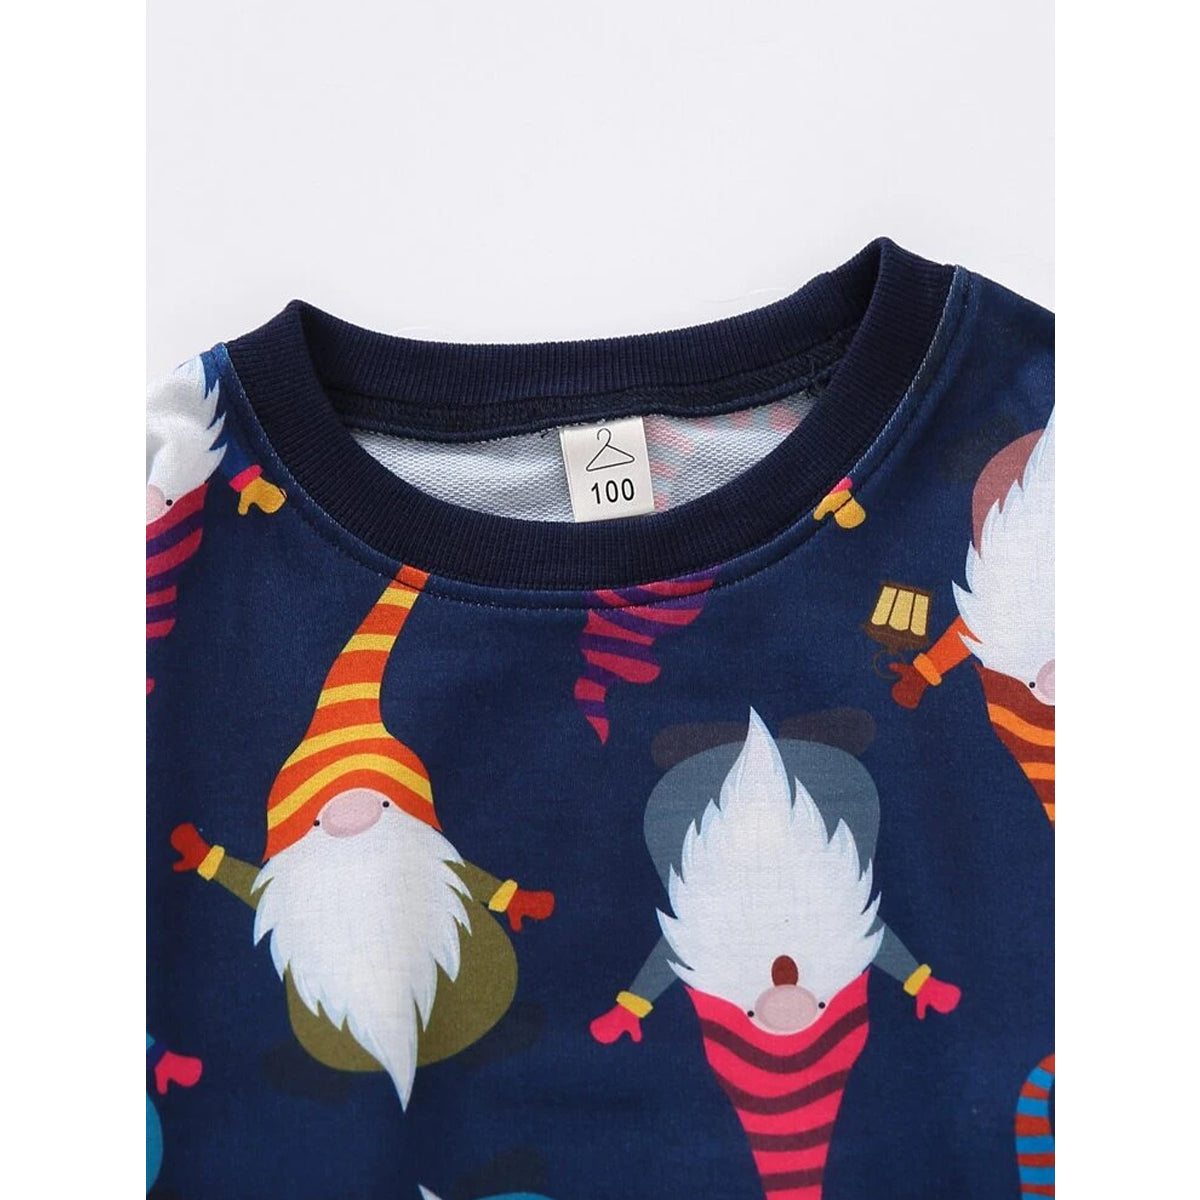 Venutaloza Boy's Letter Color Block & Round Neck Stripe & Sewing Patterns (Combo Pack of 3) T-shirt For Boys & Girls..